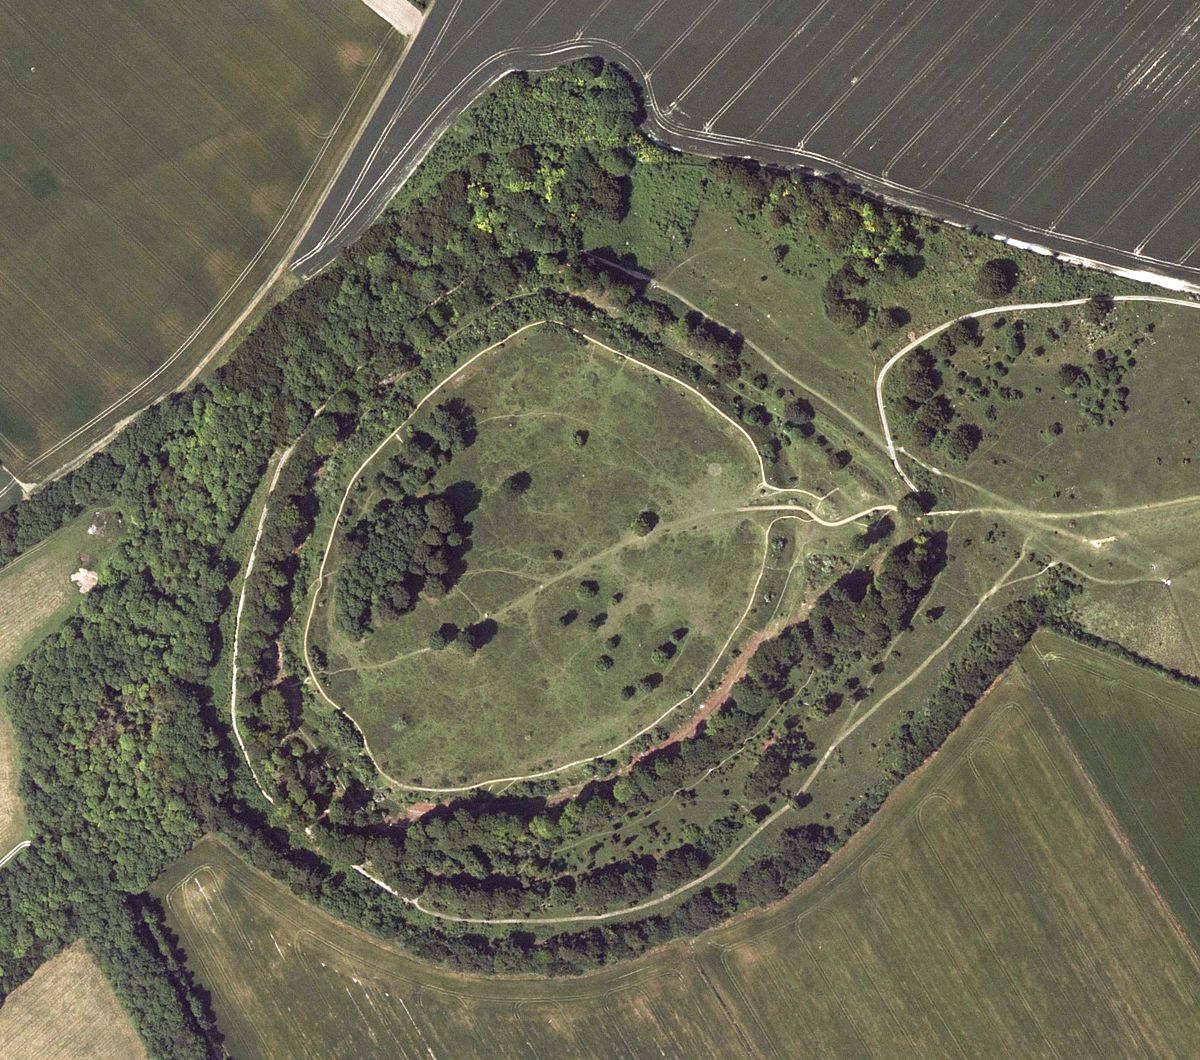 Danebury Hill Fort courtesy of Wikipedia